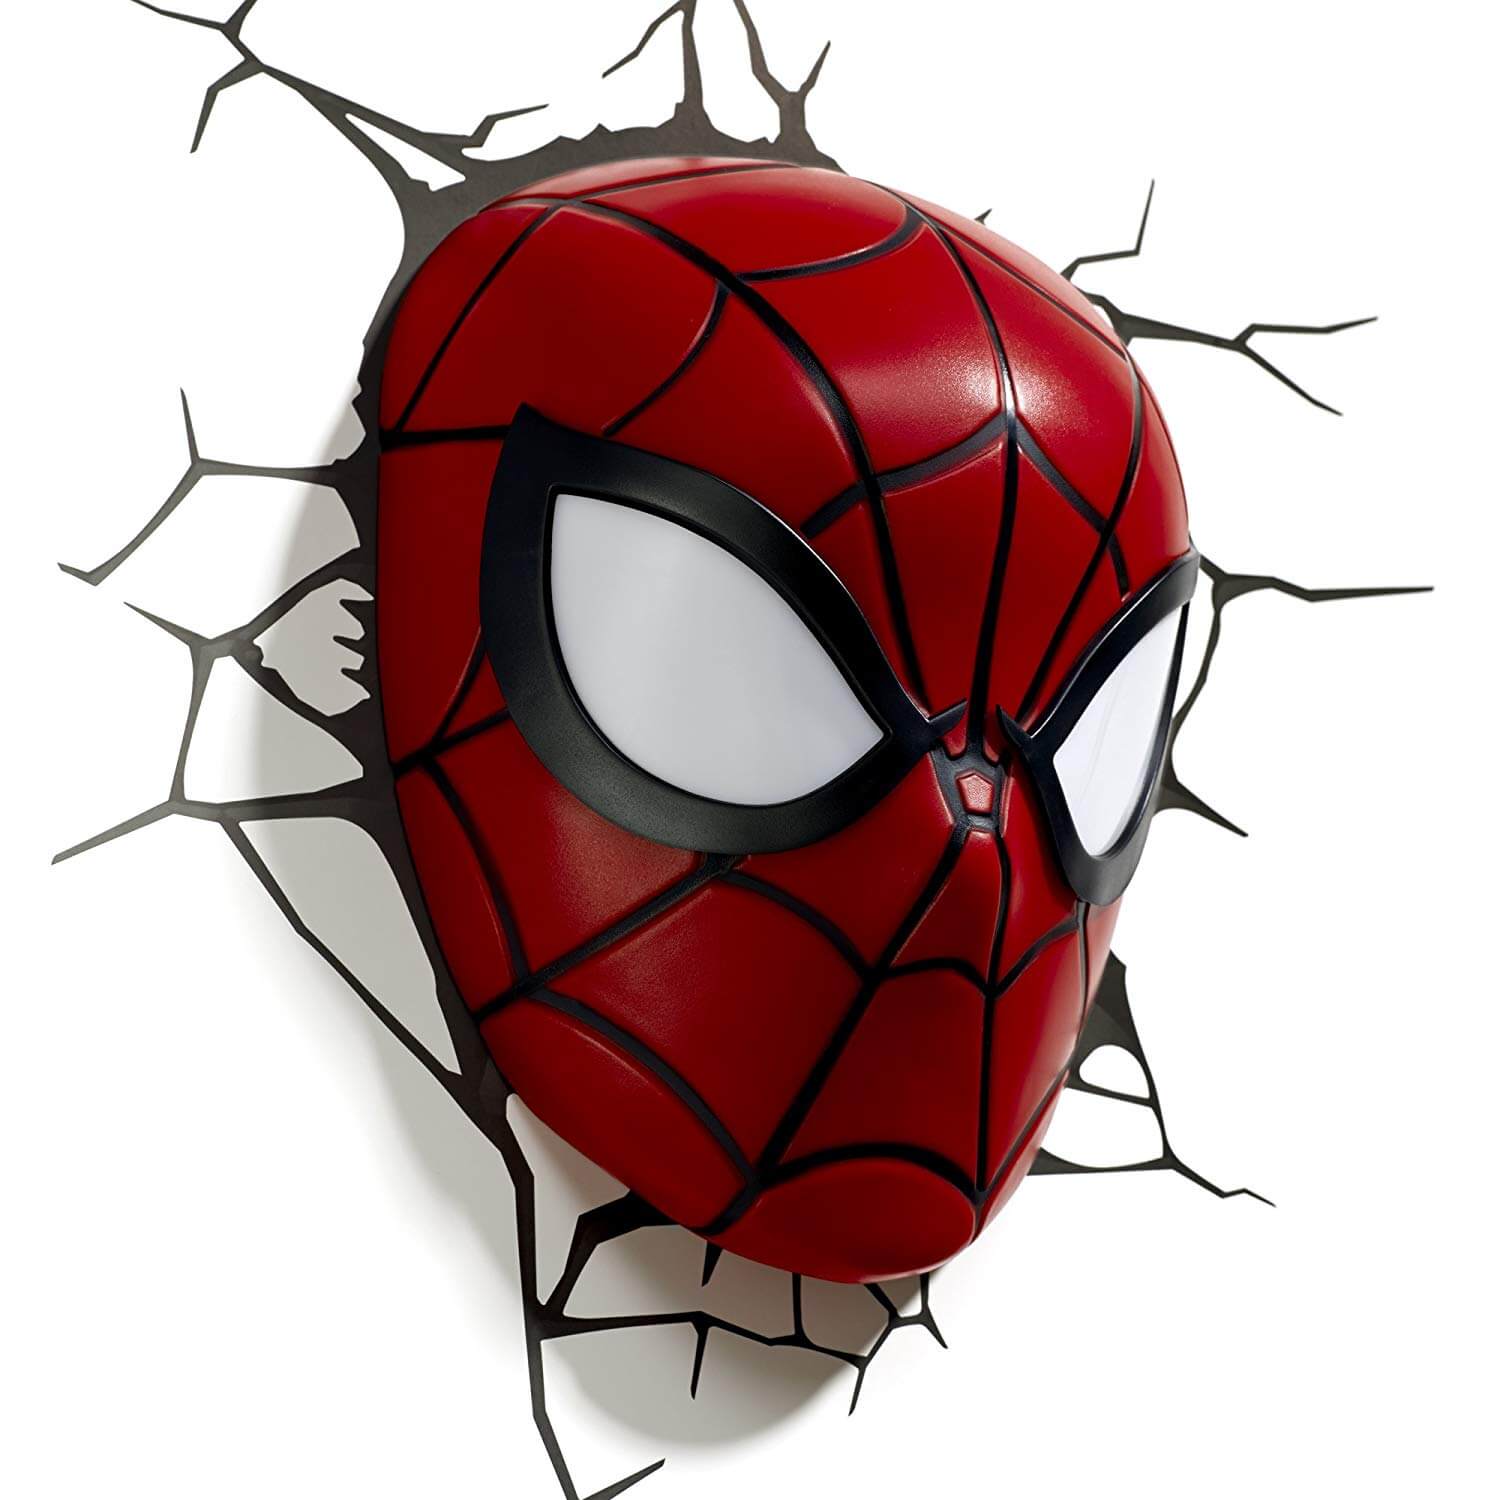 Superhelden 3D Wandleuchten – Optisch ein Highlight - Spiderman 3